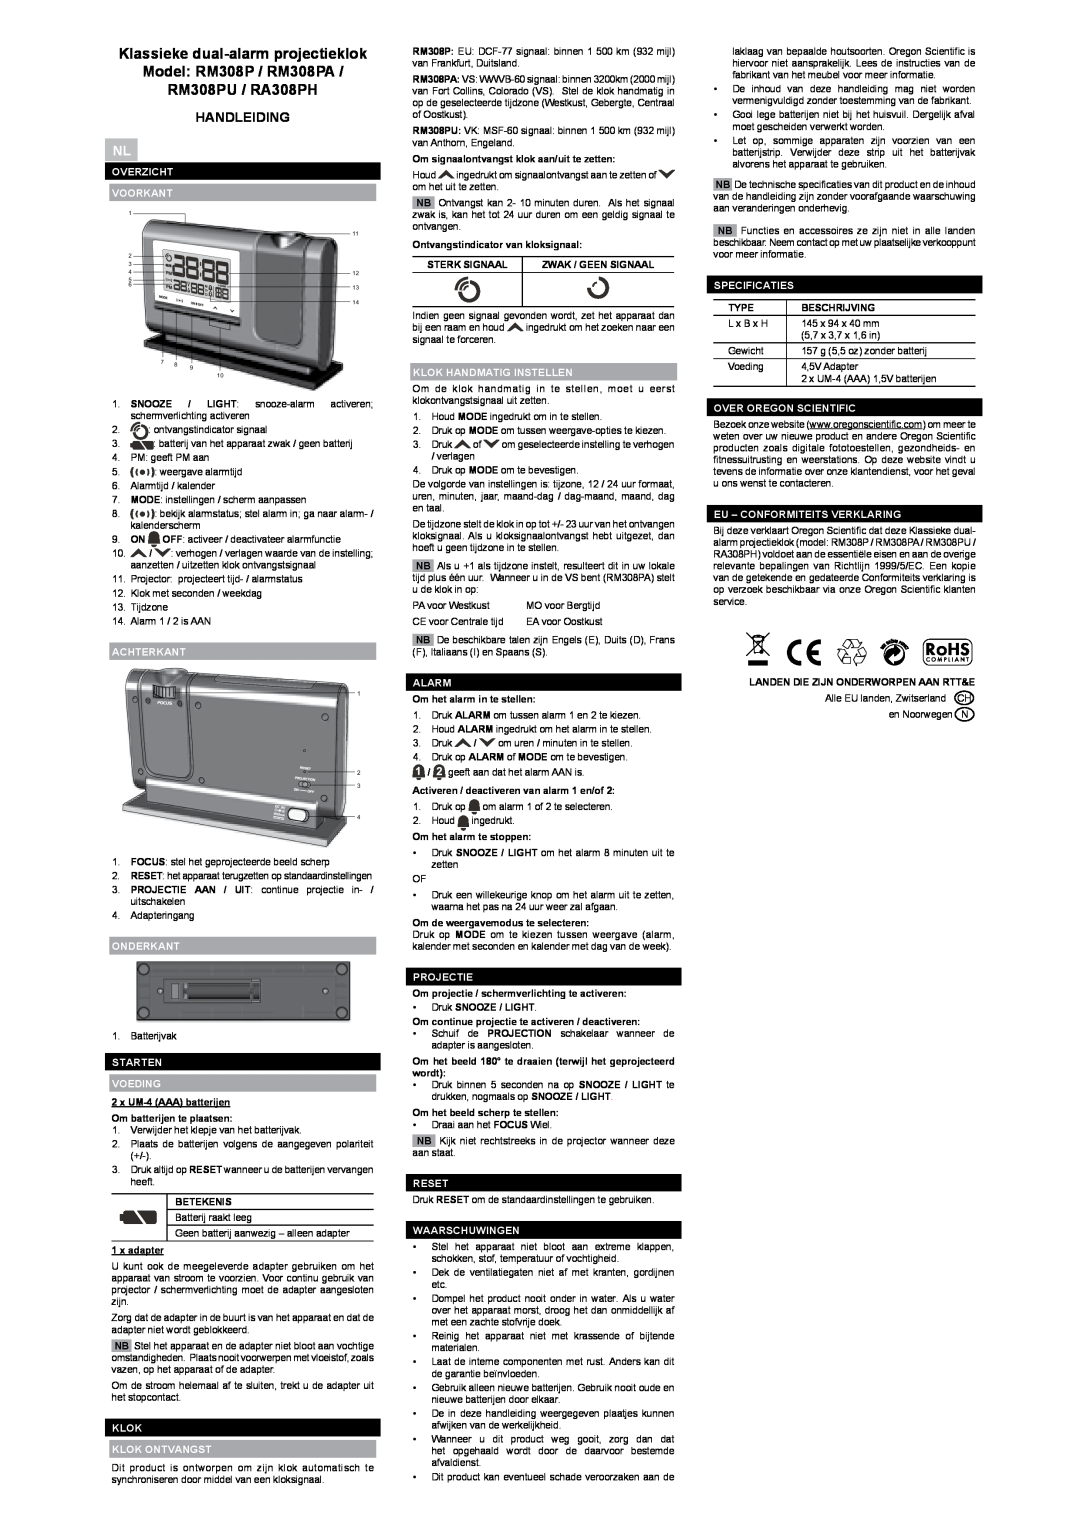 Oregon Scientific user manual Klassieke dual-alarm projectieklok Model RM308P / RM308PA, Handleiding, RM308PU / RA308PH 